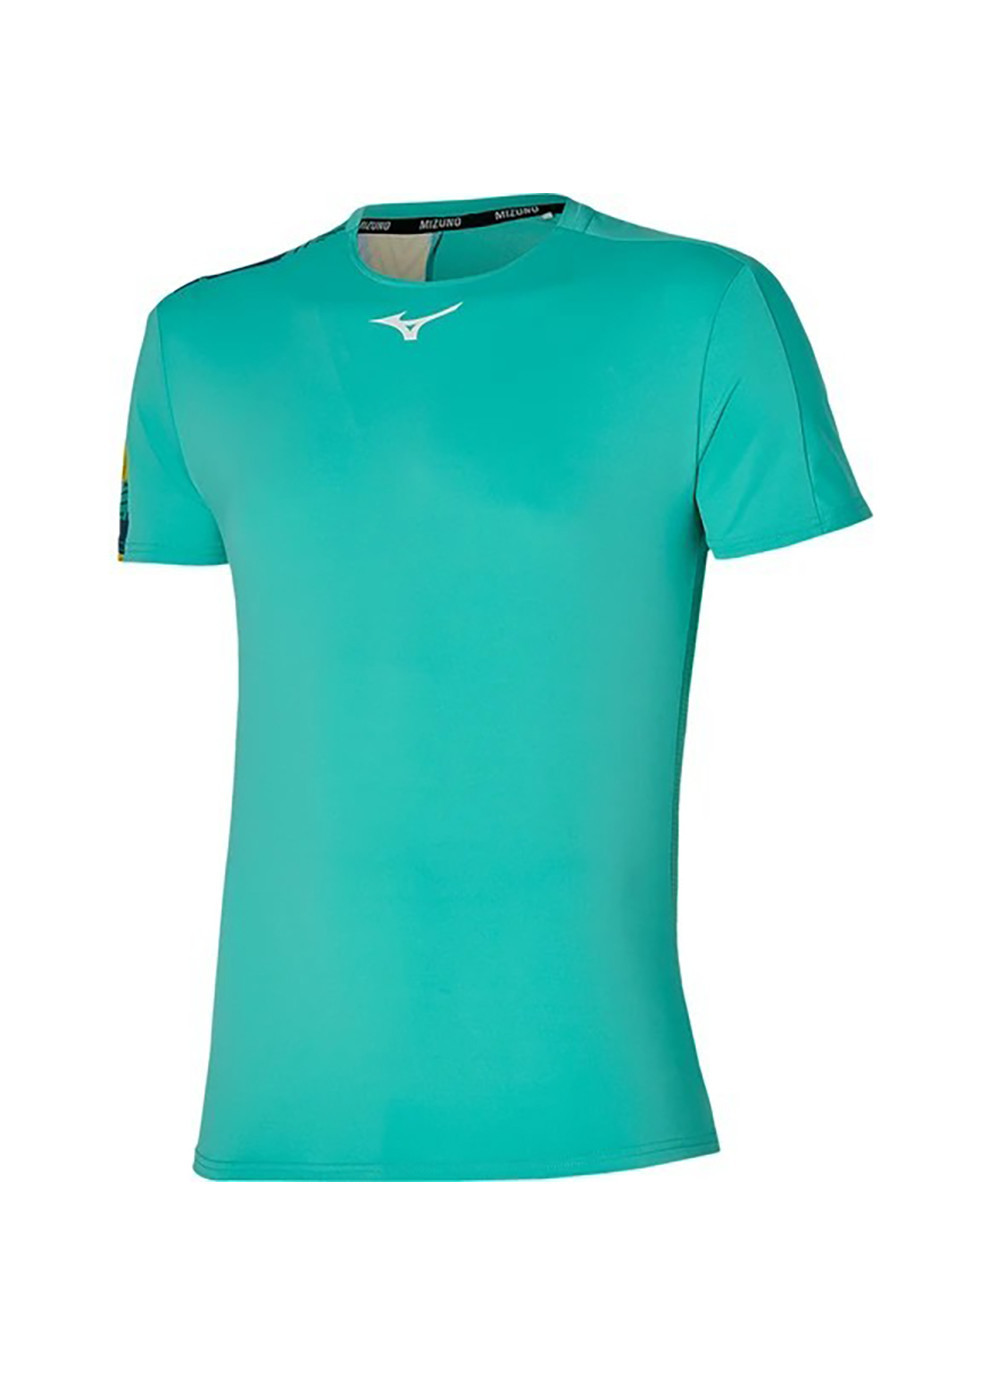 Бирюзовая мужская футболка shadow tee turquoise (l) Mizuno